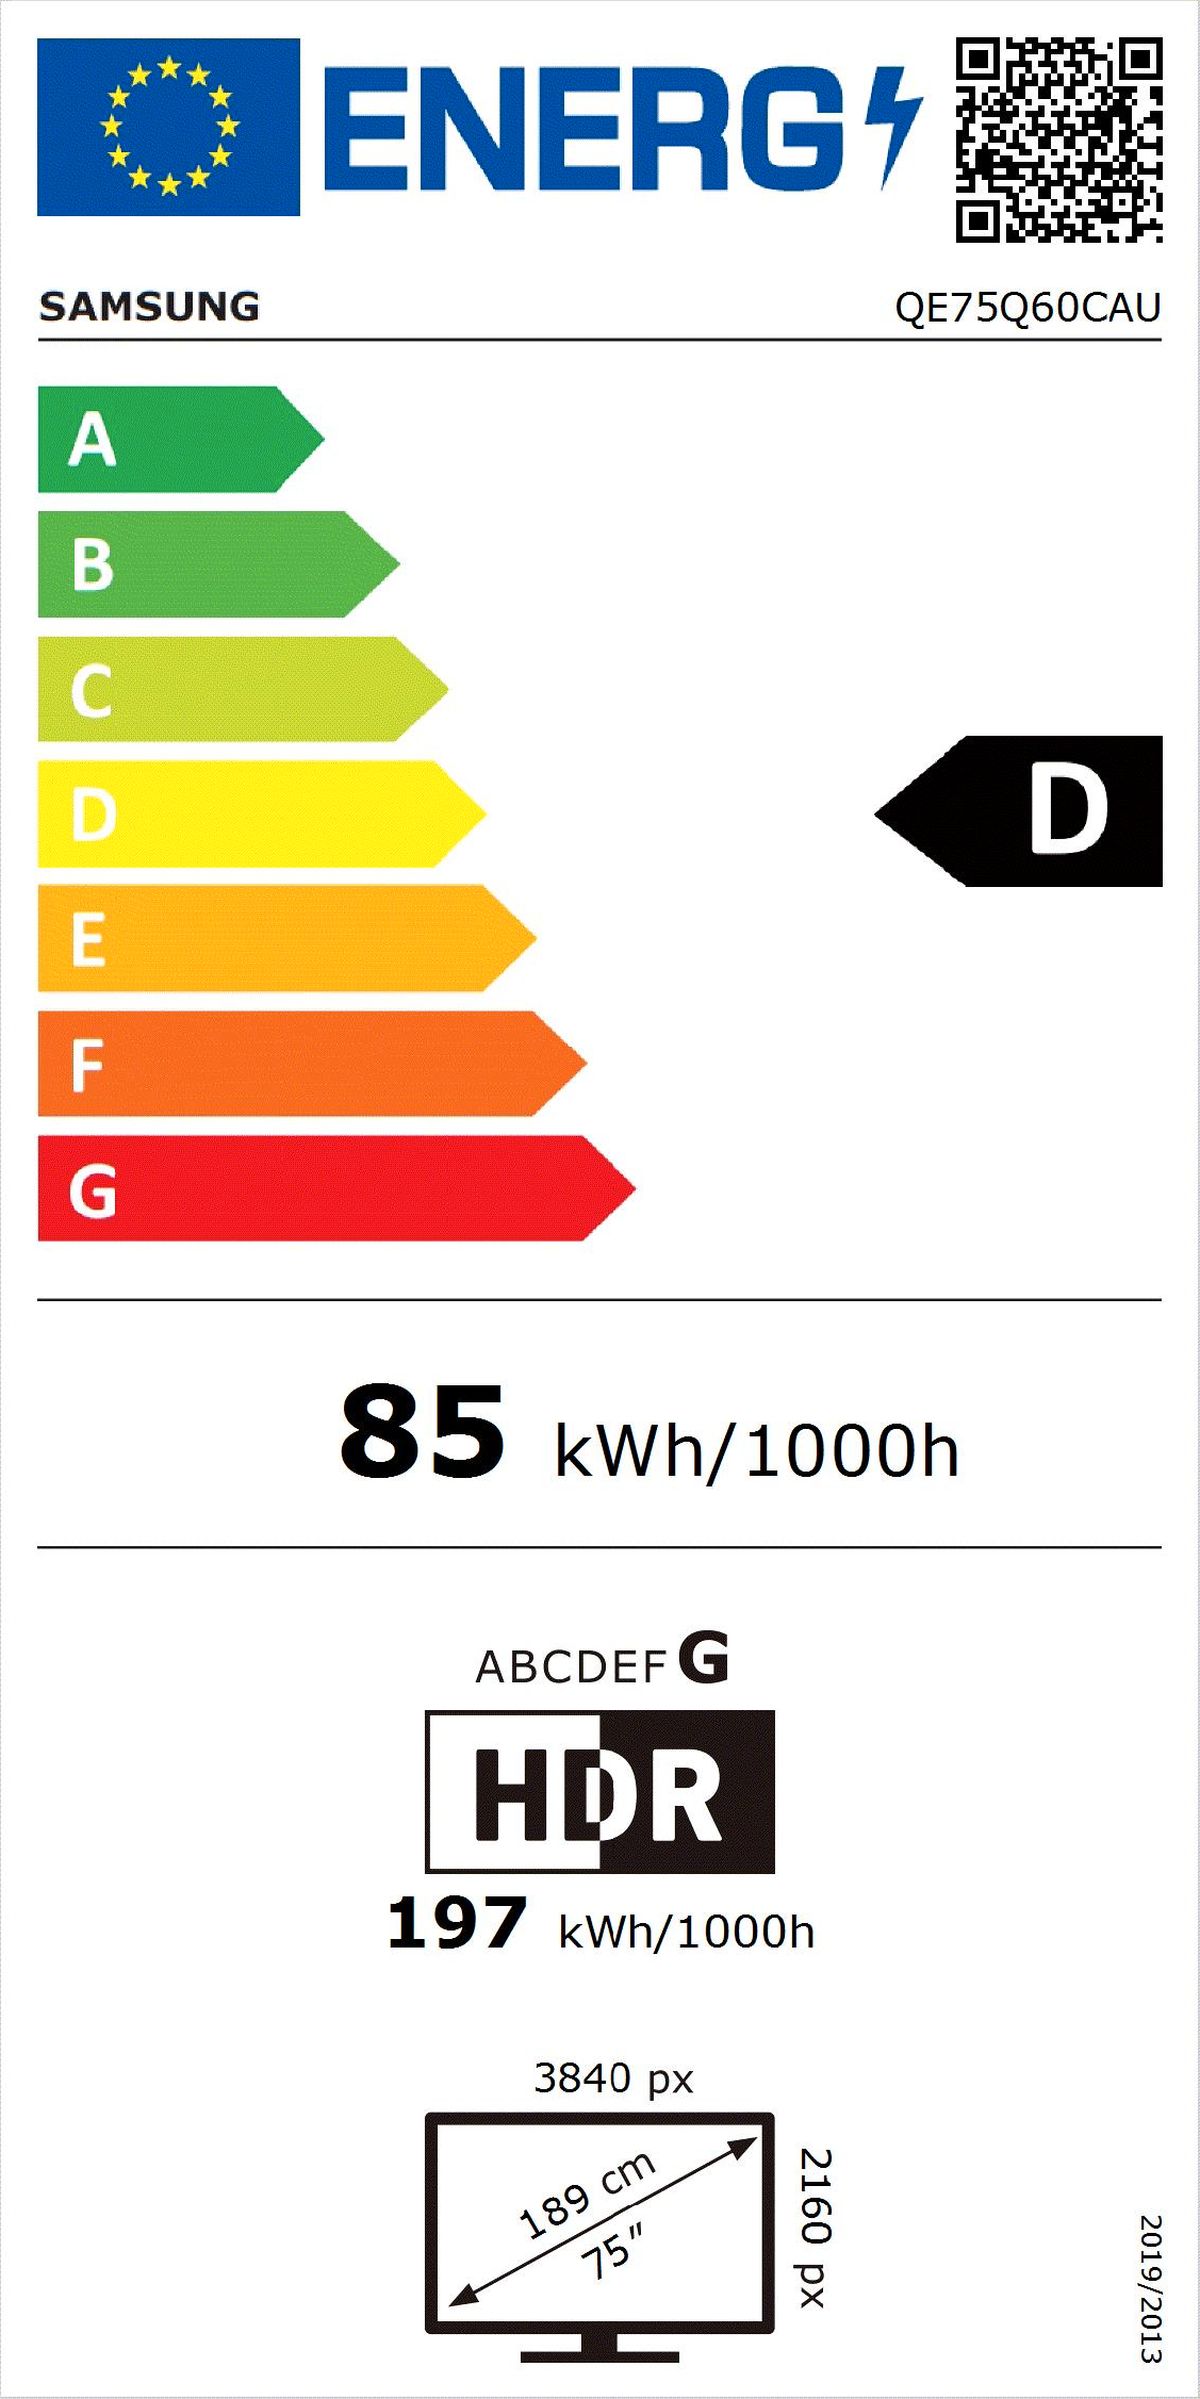 Energetski certifikat D